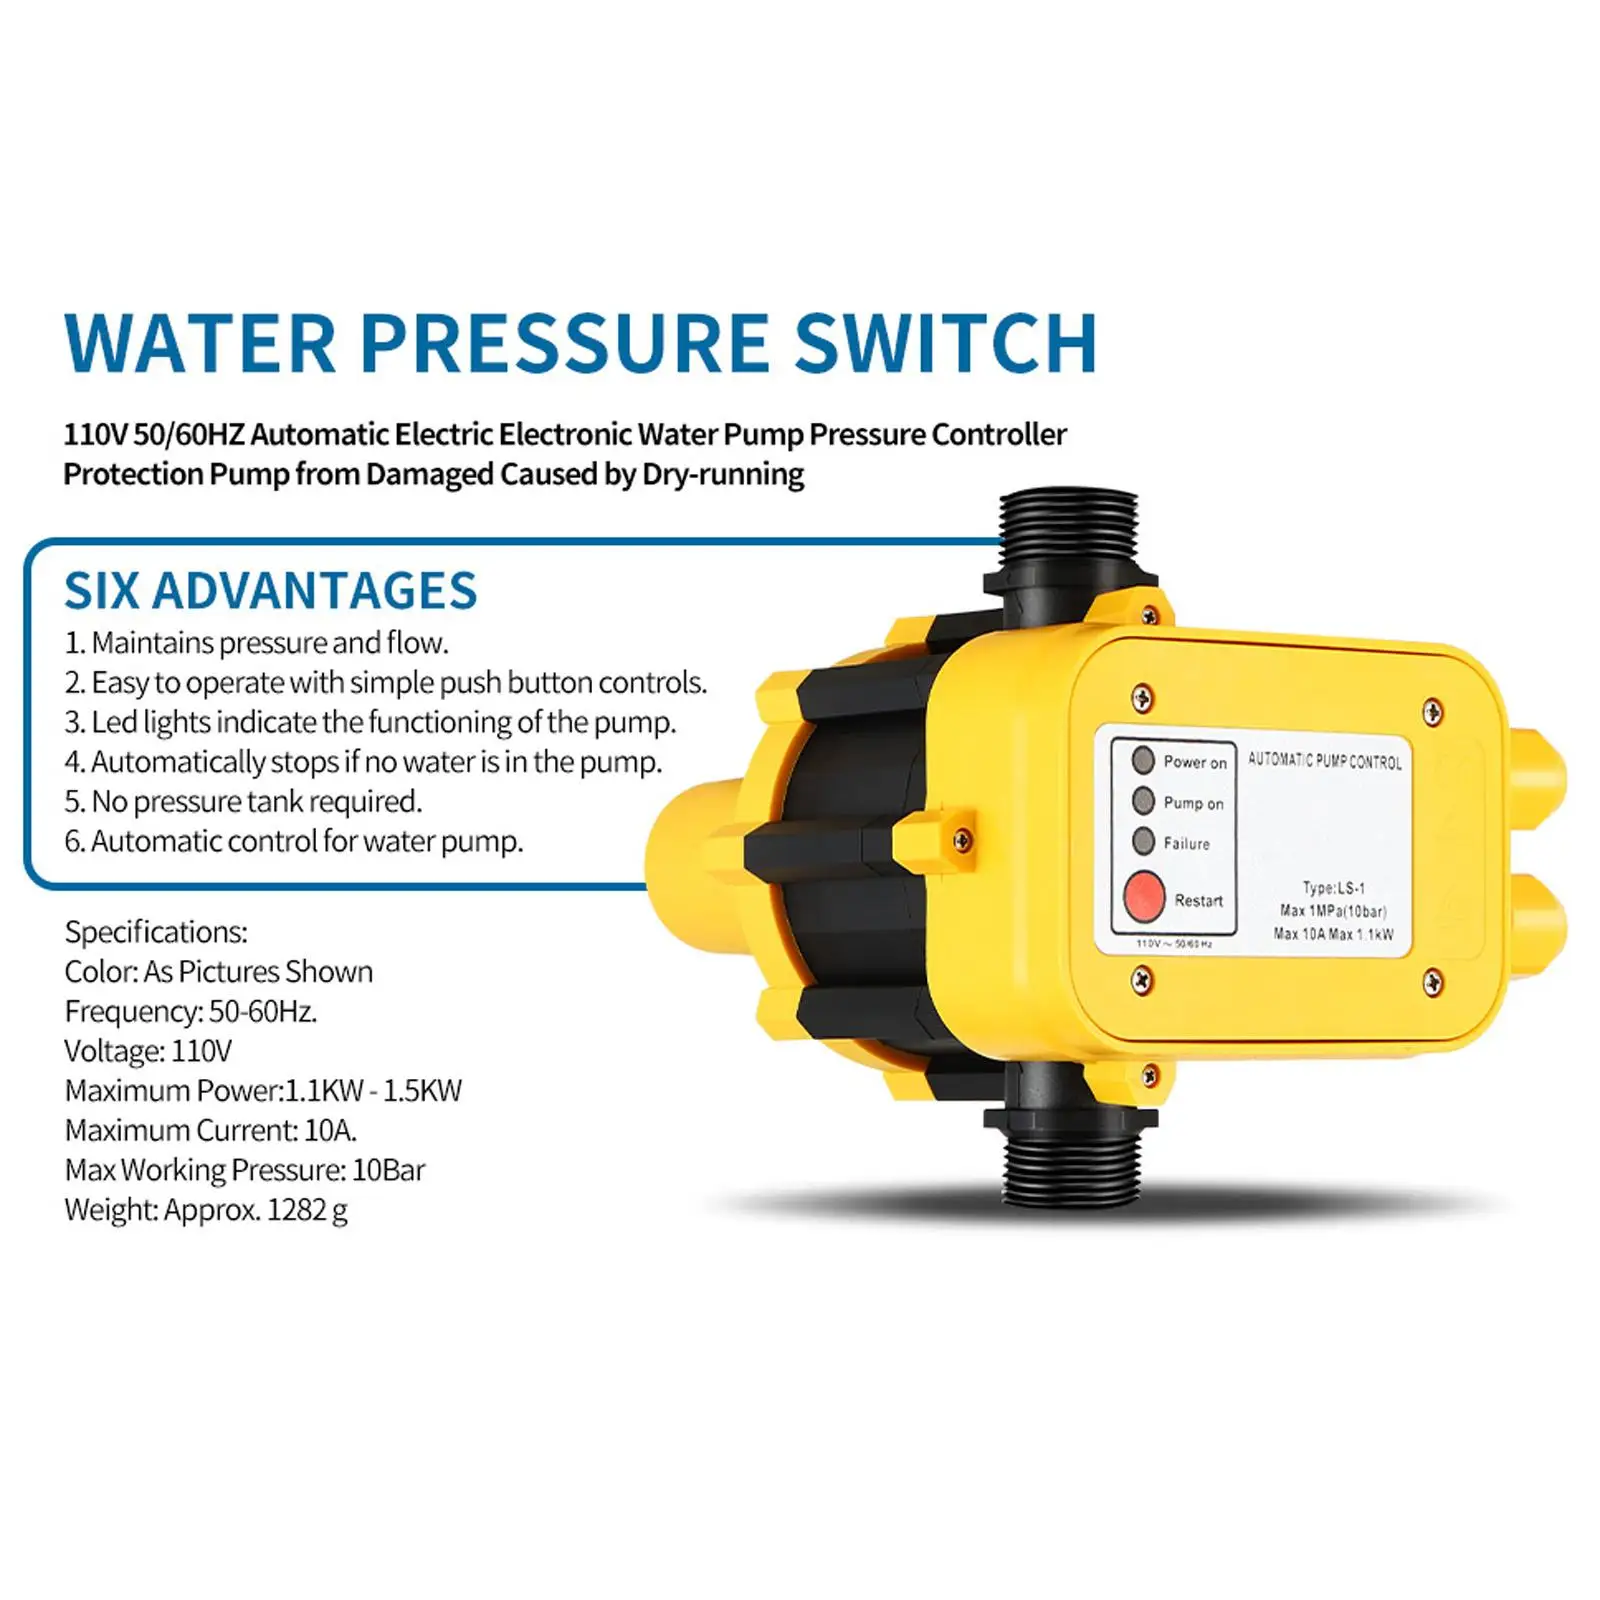 Electronic Water Pump Pressure Controller Max. 10Bar Waterproof 50/60Hz